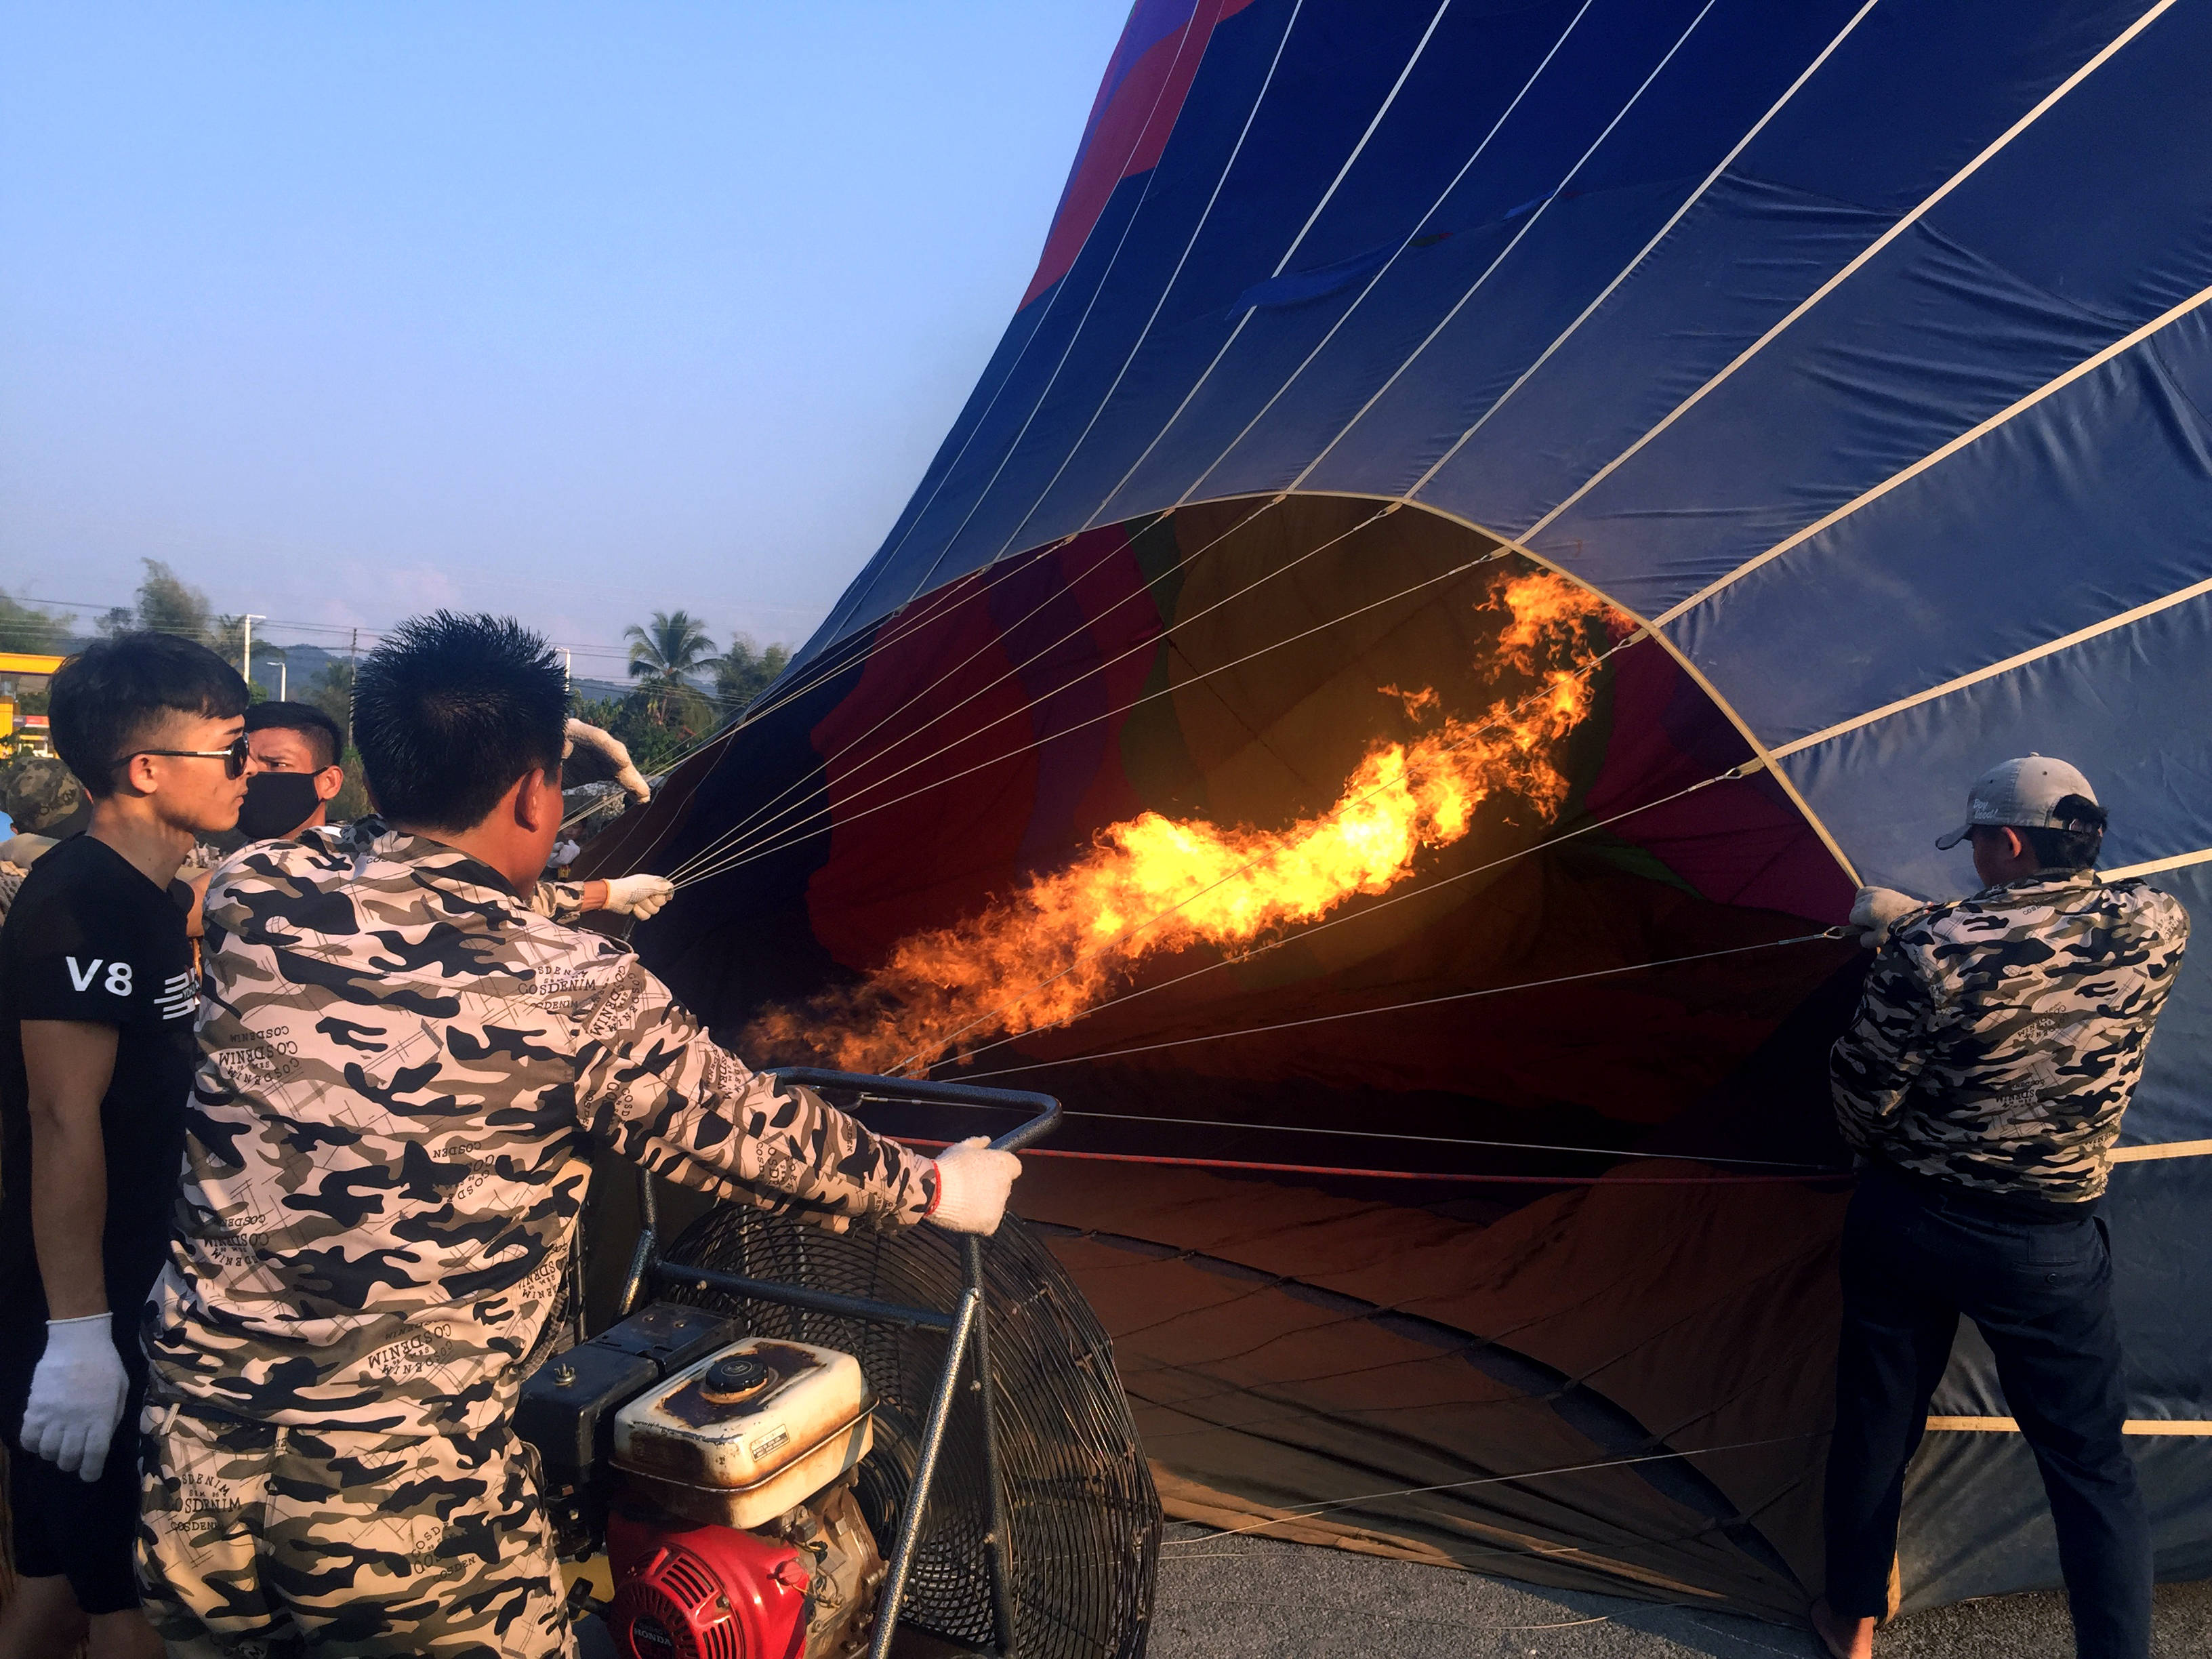 Download Laos Hot Air Balloon Wallpaper 